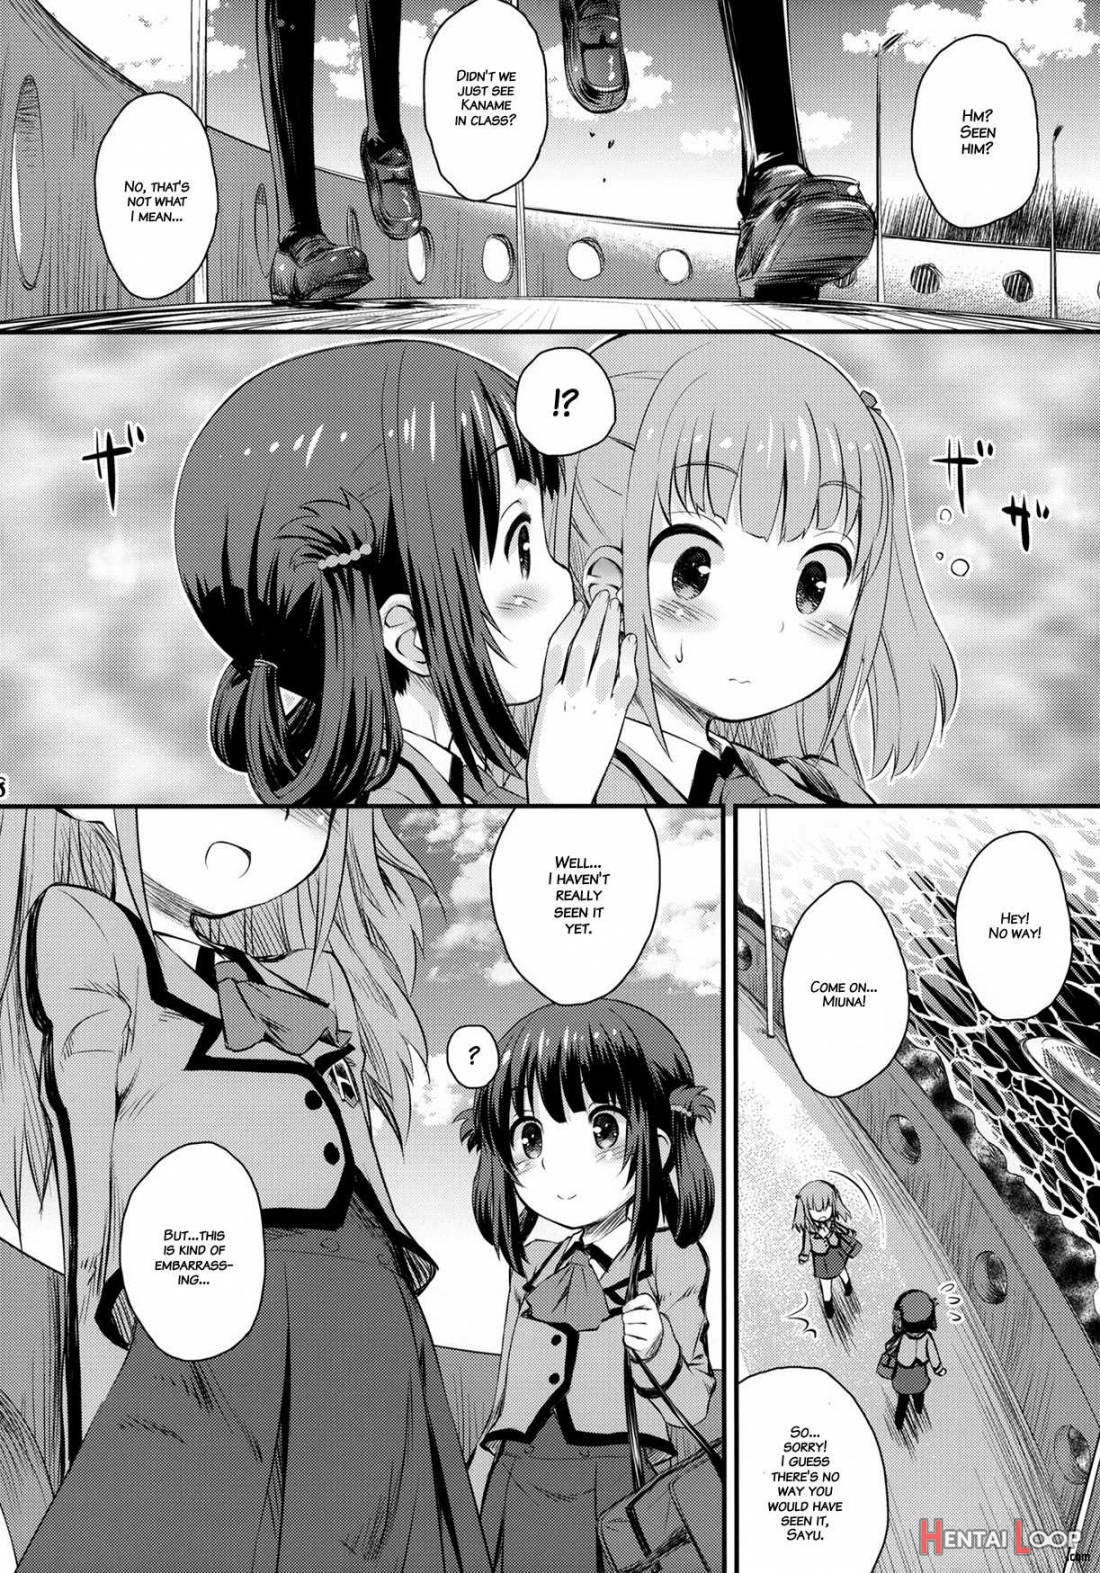 Hatsu Miuna page 7